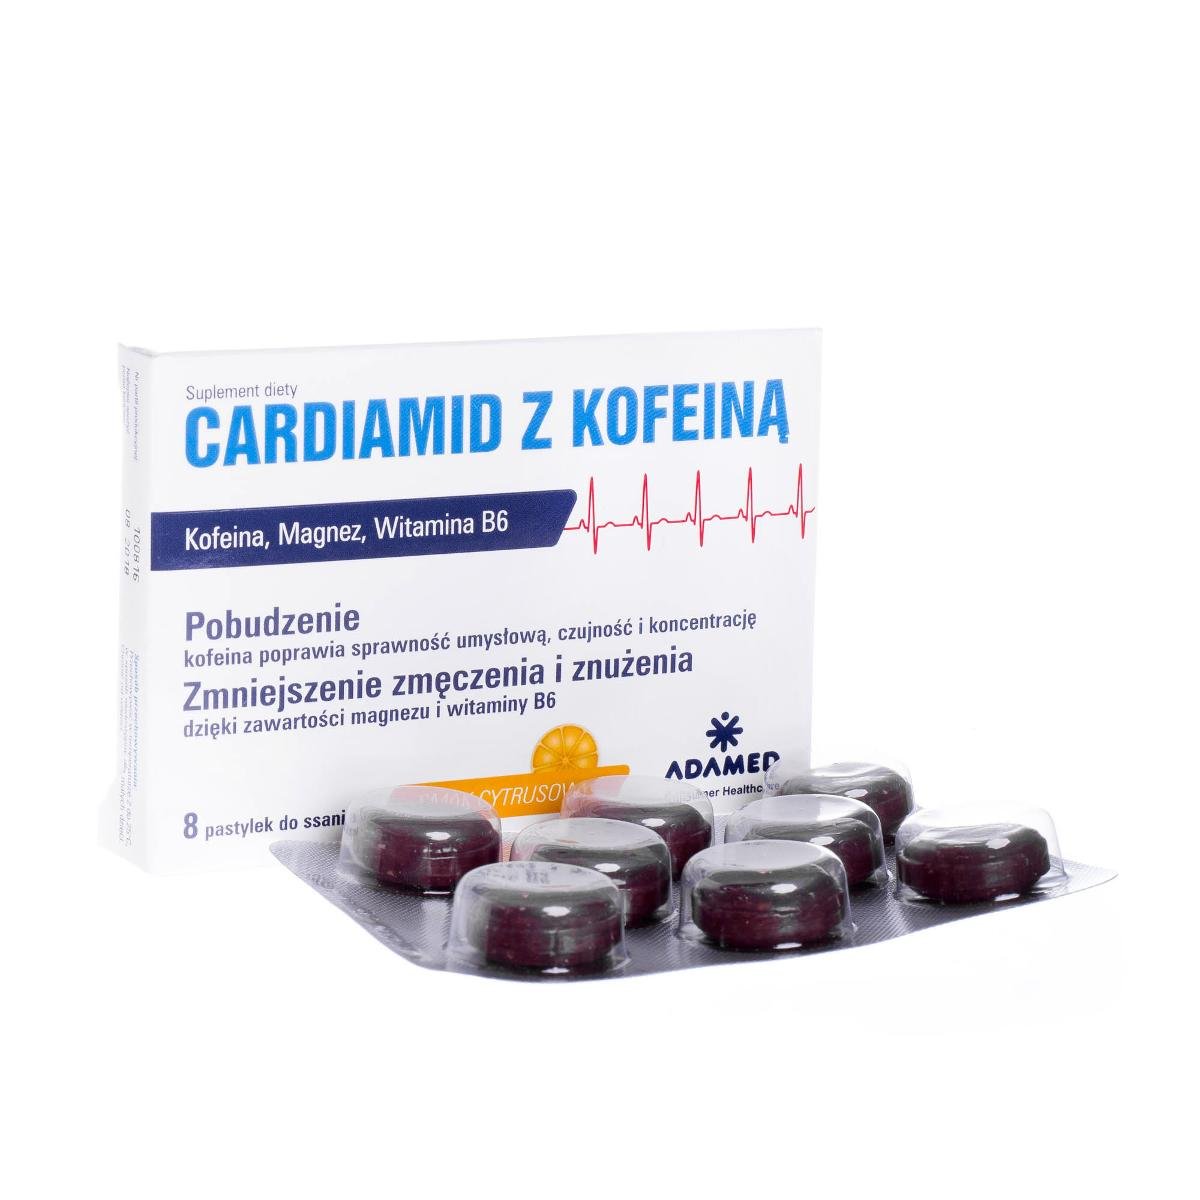 Фото - Вітаміни й мінерали Cardiamid z kofeiną - 8 pastylek do ssania o smaku cytrusowym Suplement di